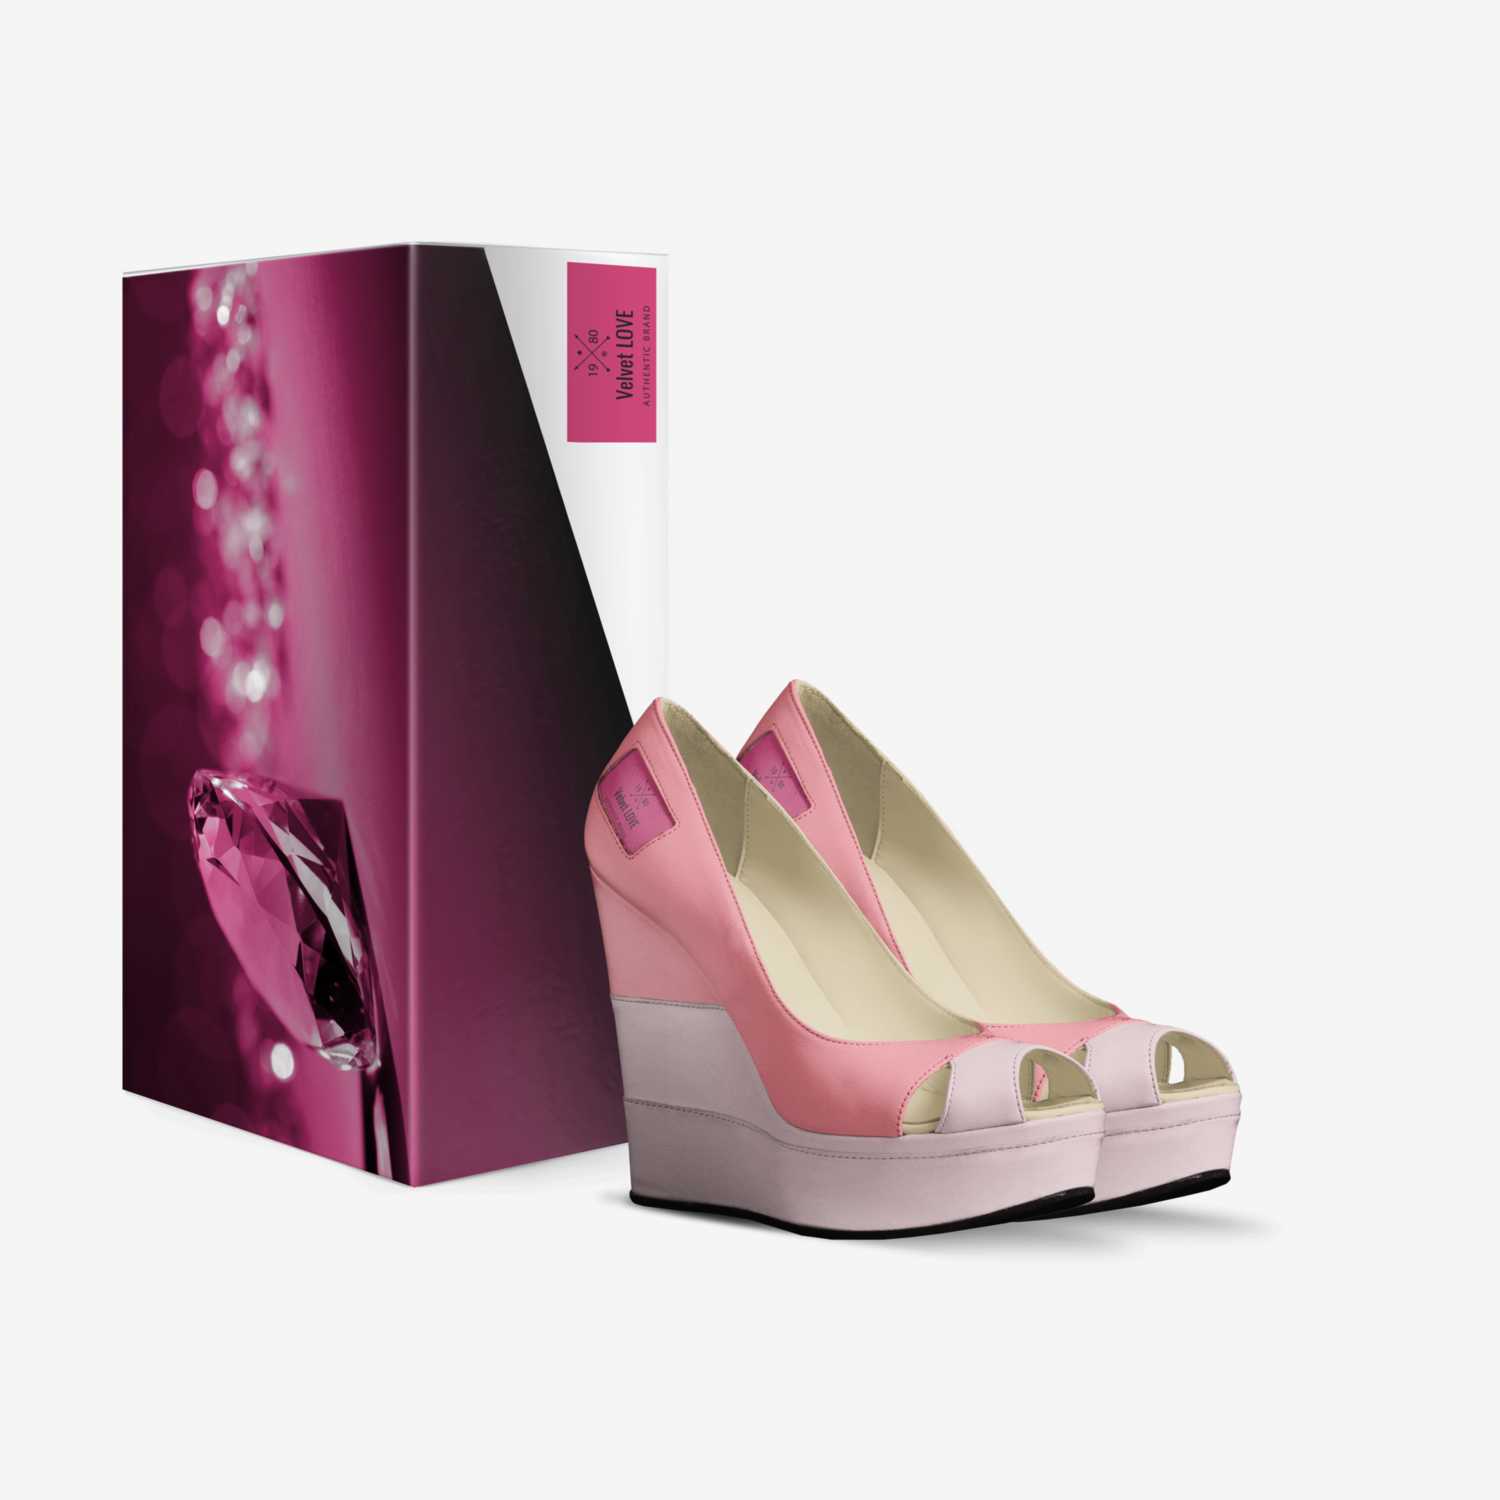 Velvet LOVE custom made in Italy shoes by Shantae Esannason | Box view